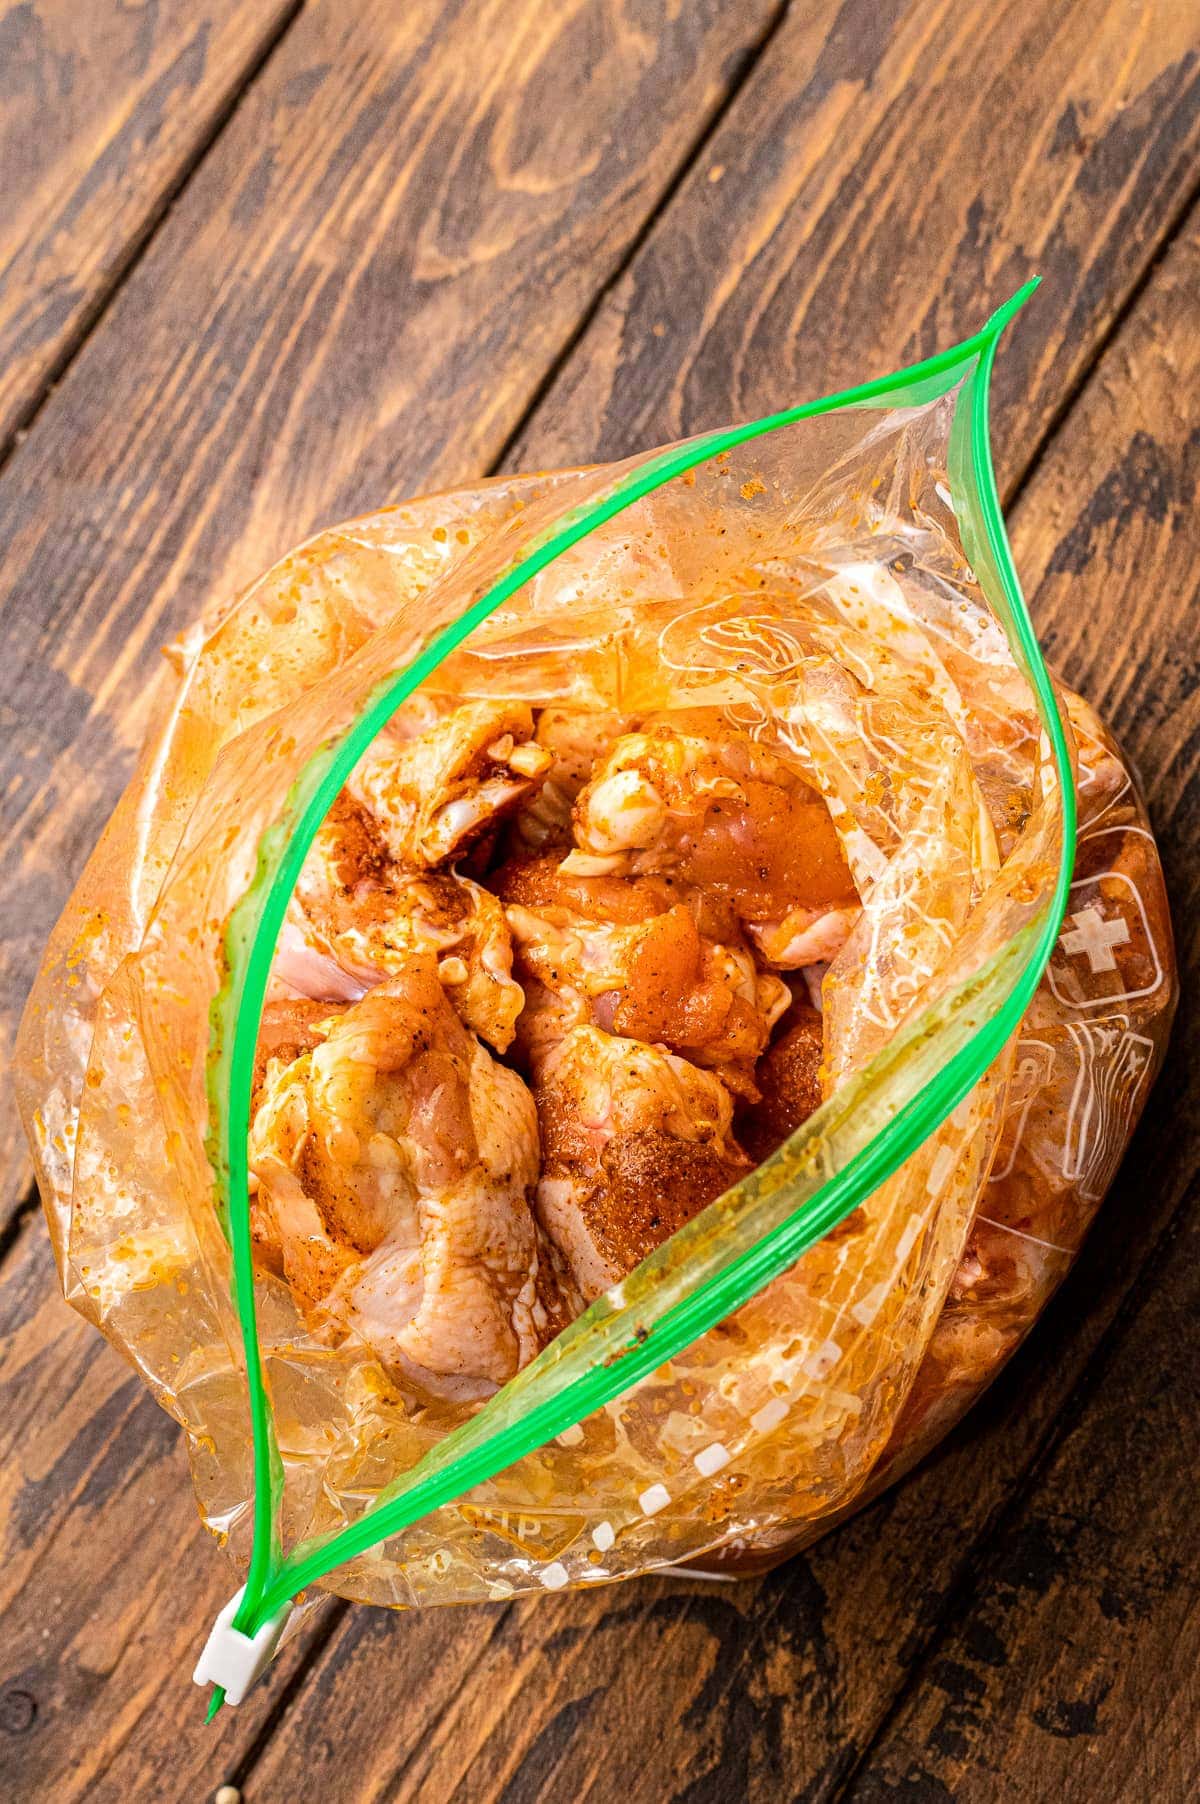 Ziplock bag with chicken wings in it and seasonings on wood cutting board.